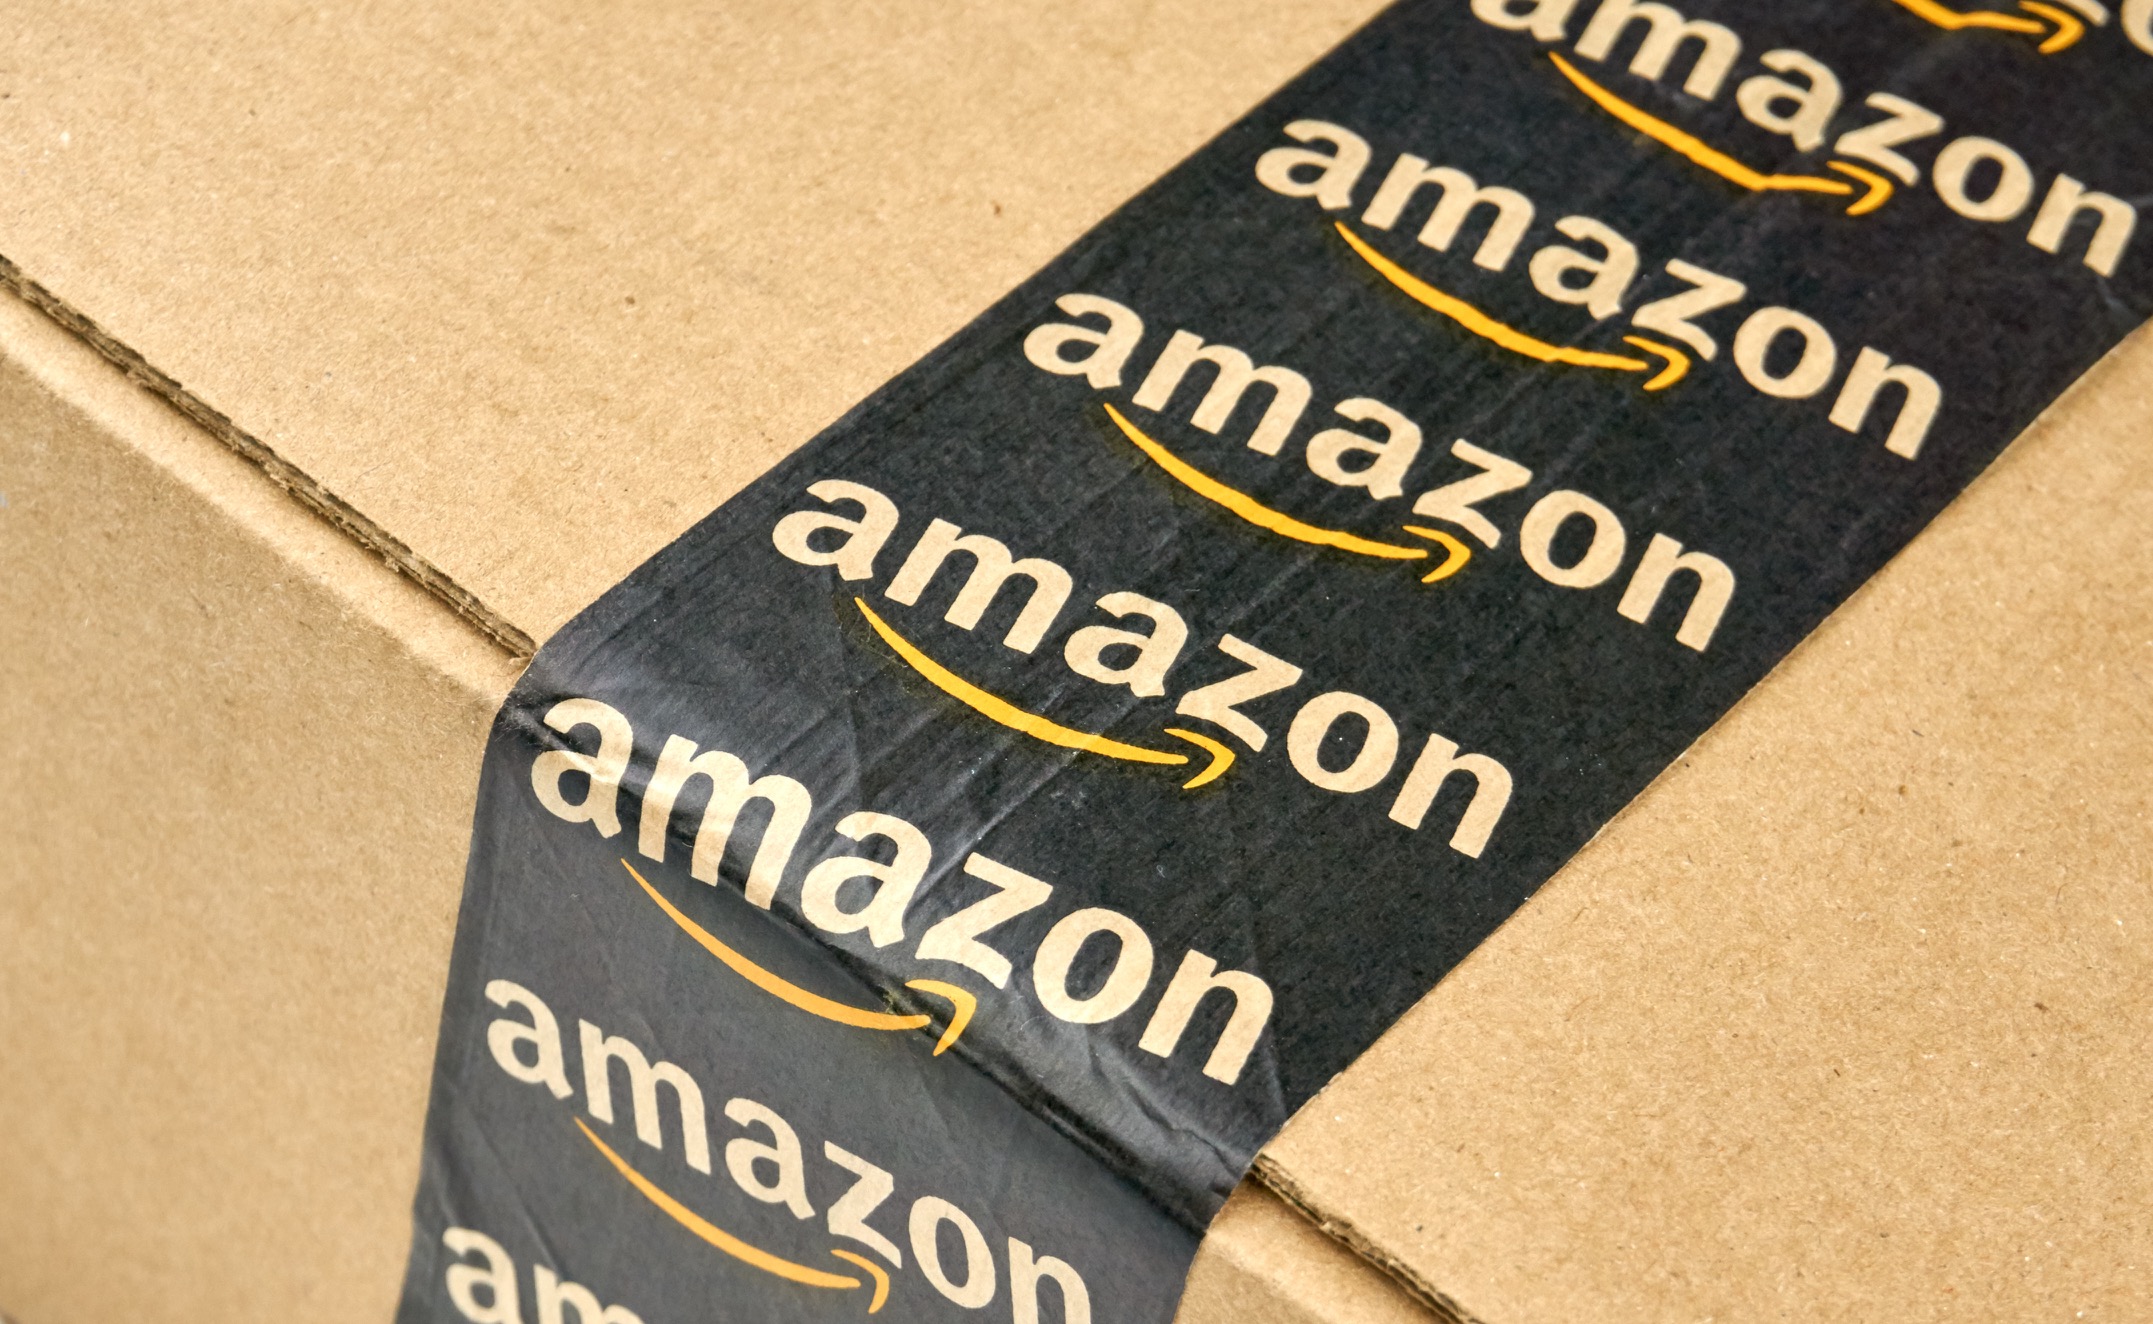 Caixa da Amazon